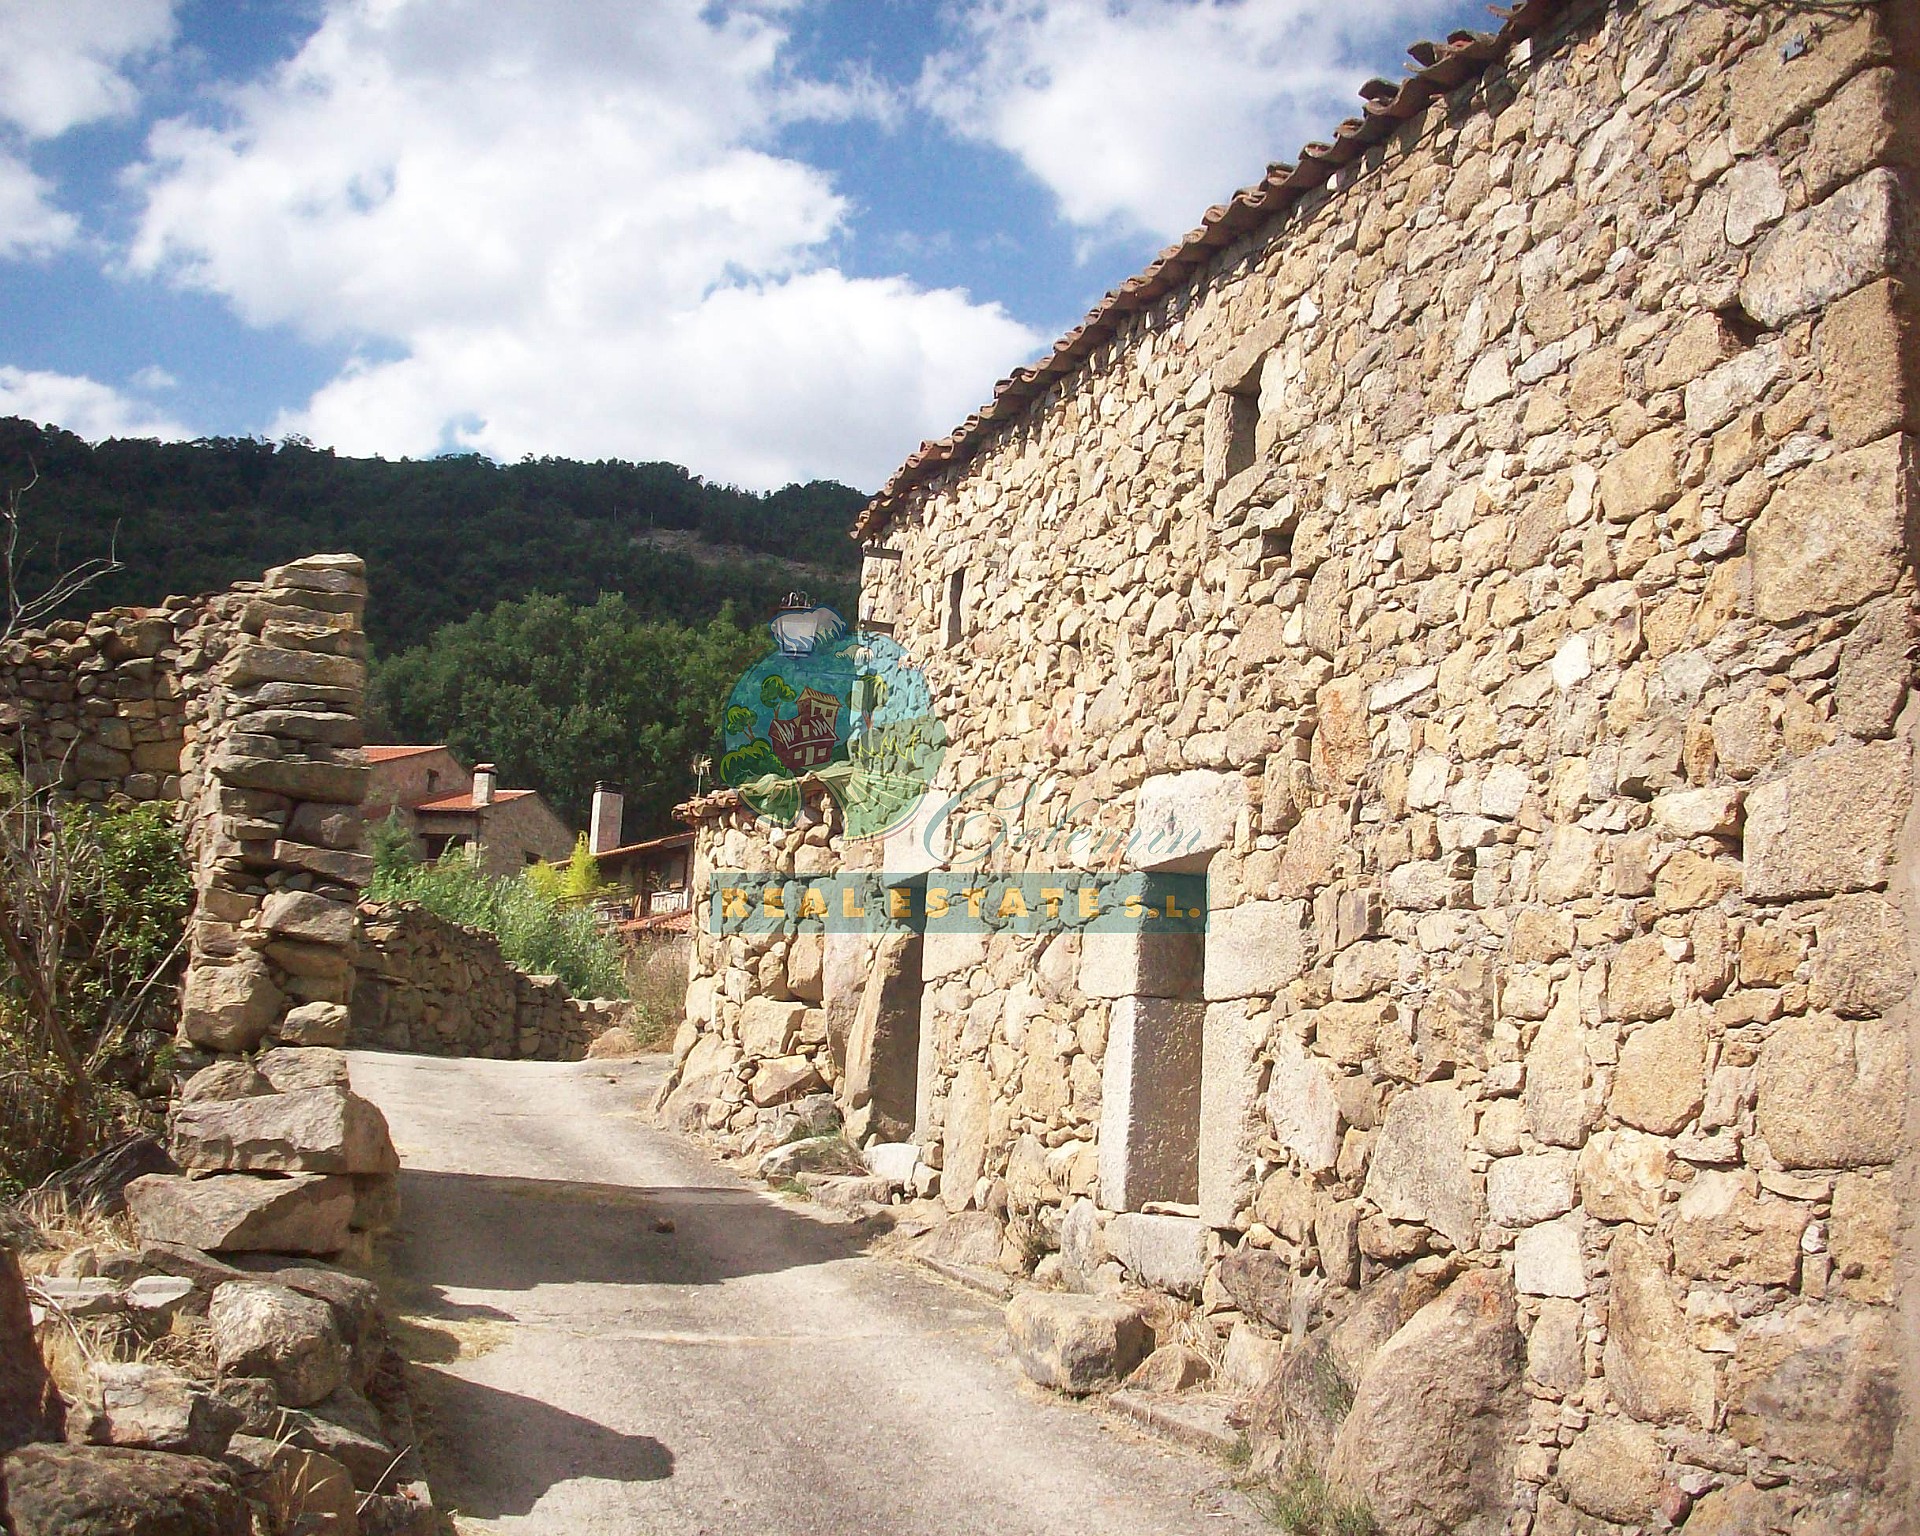 Barn for restoring into house in Sierra de Gredos.